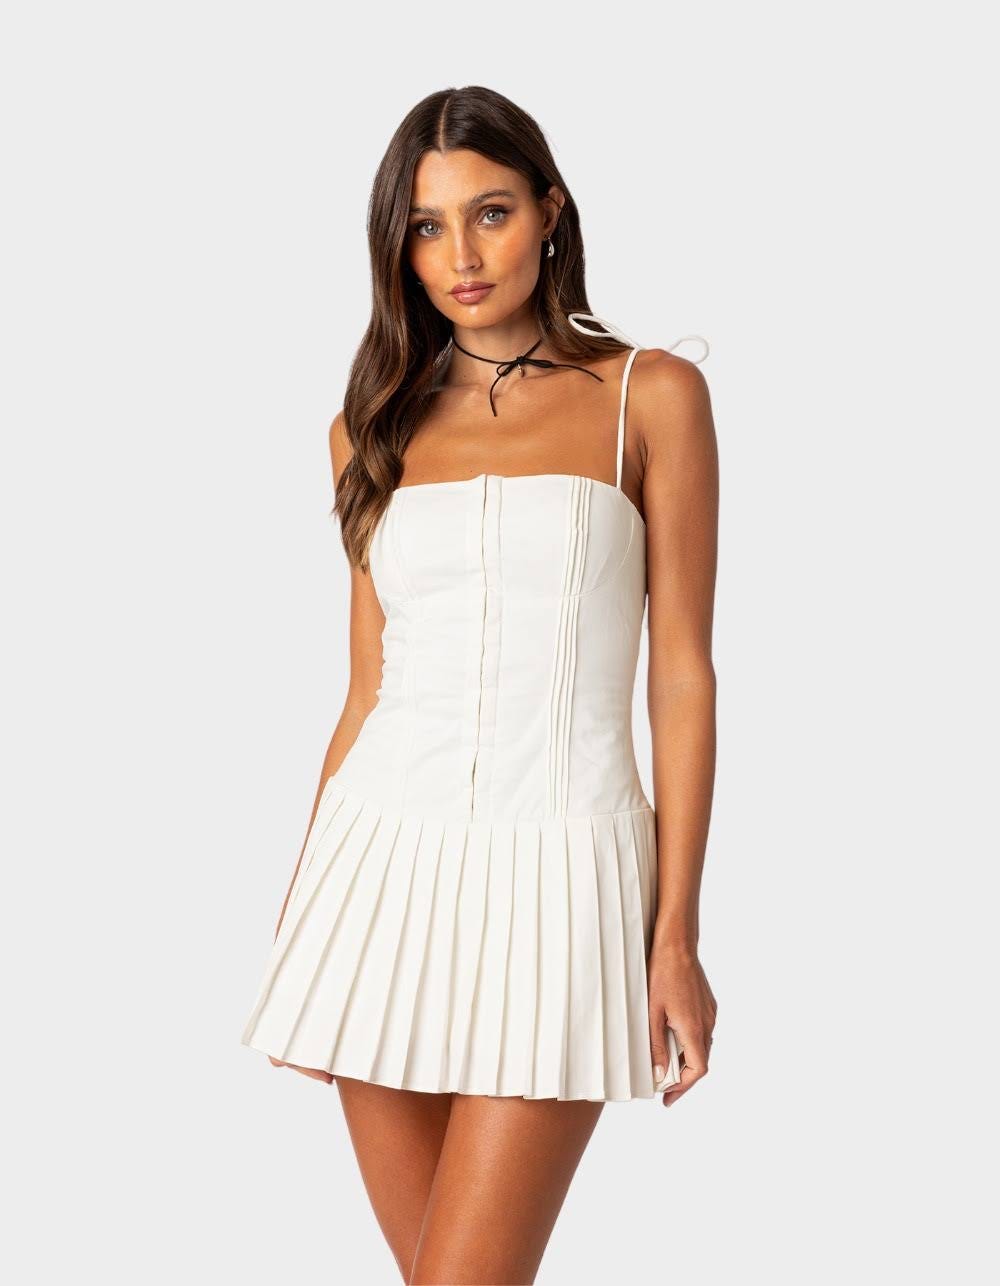 Stylish White Corset Mini Dress for Parties | Image